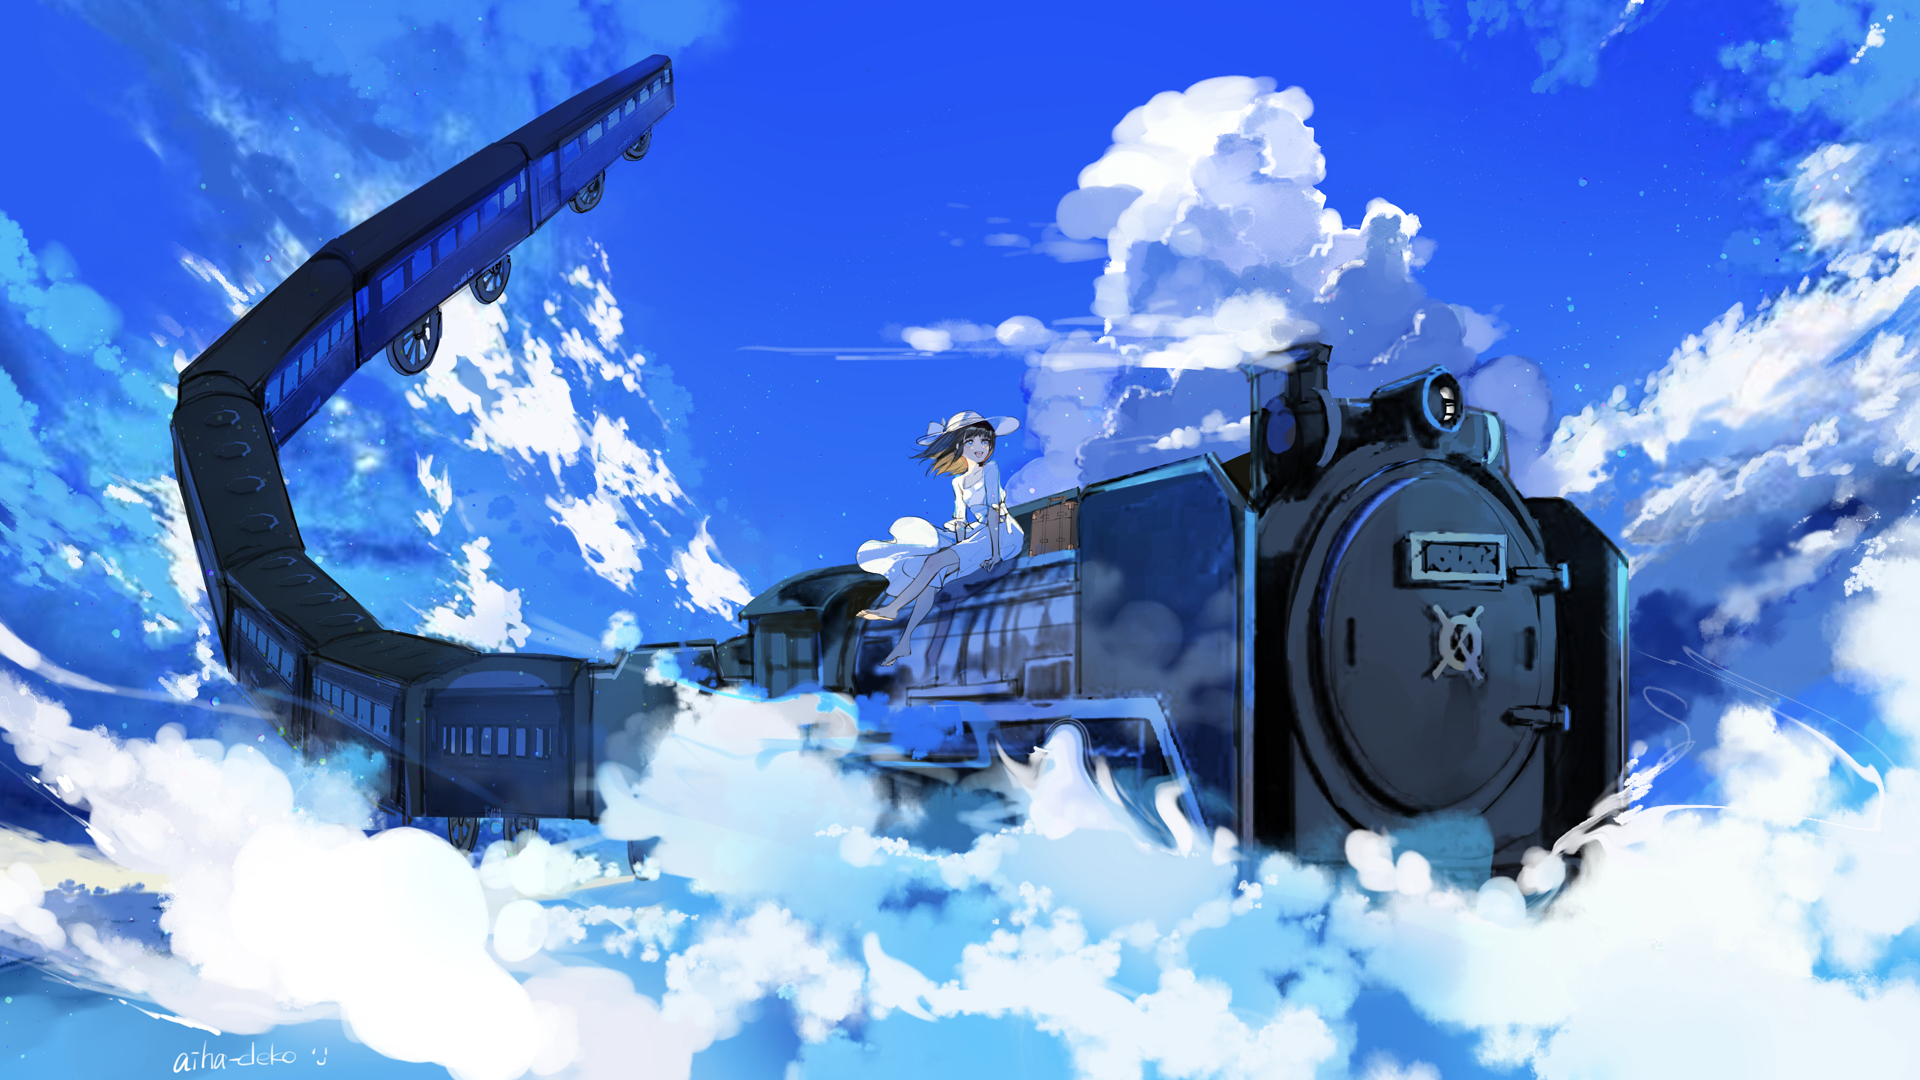 Wallpaper train station, railroad, anime girl, original desktop wallpaper,  hd image, picture, background, 48a154 | wallpapersmug